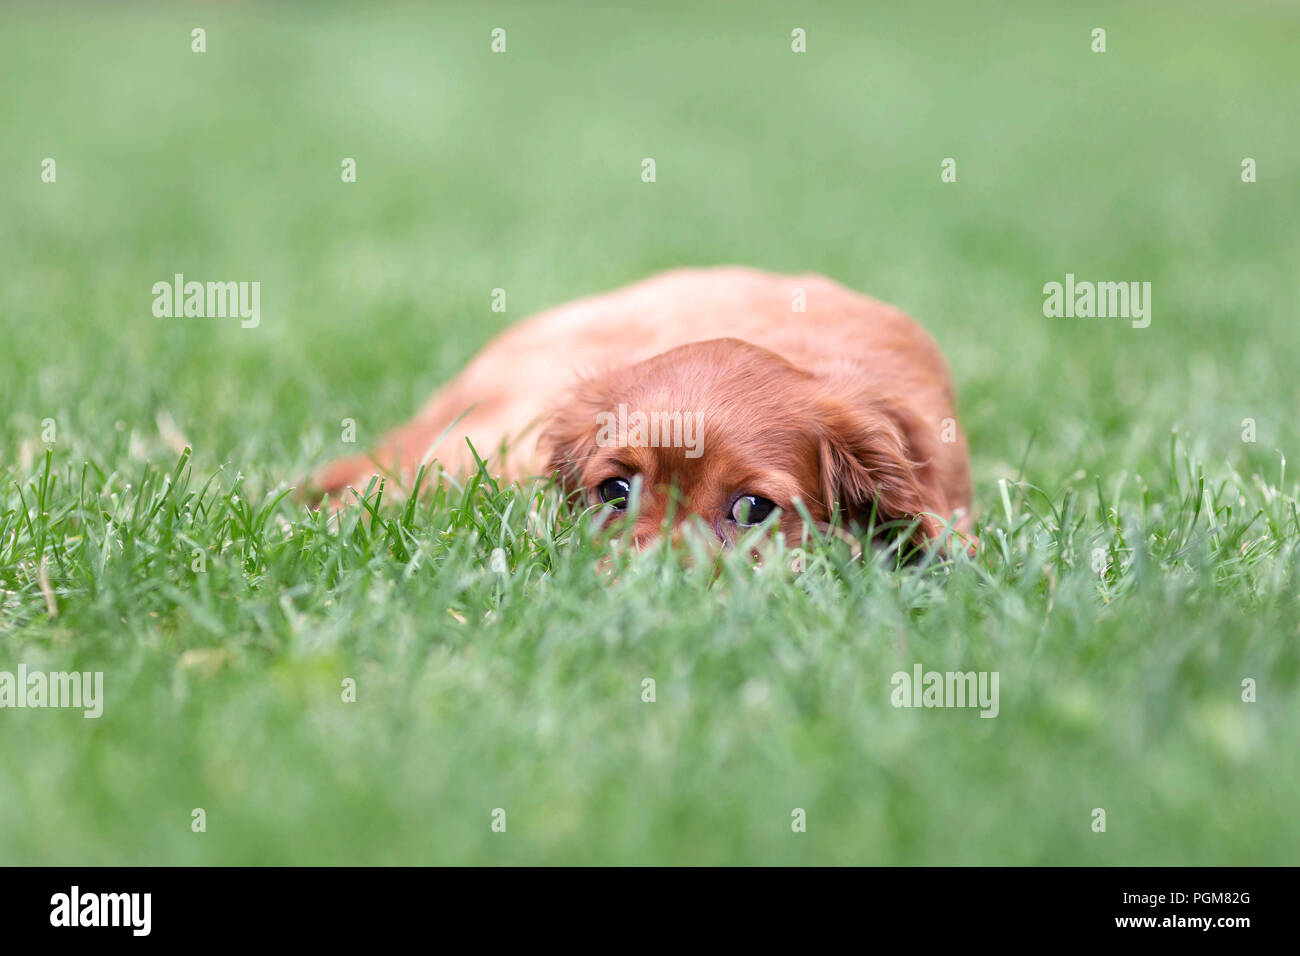 Adorable puppy hiding in the green grass Stock Photo